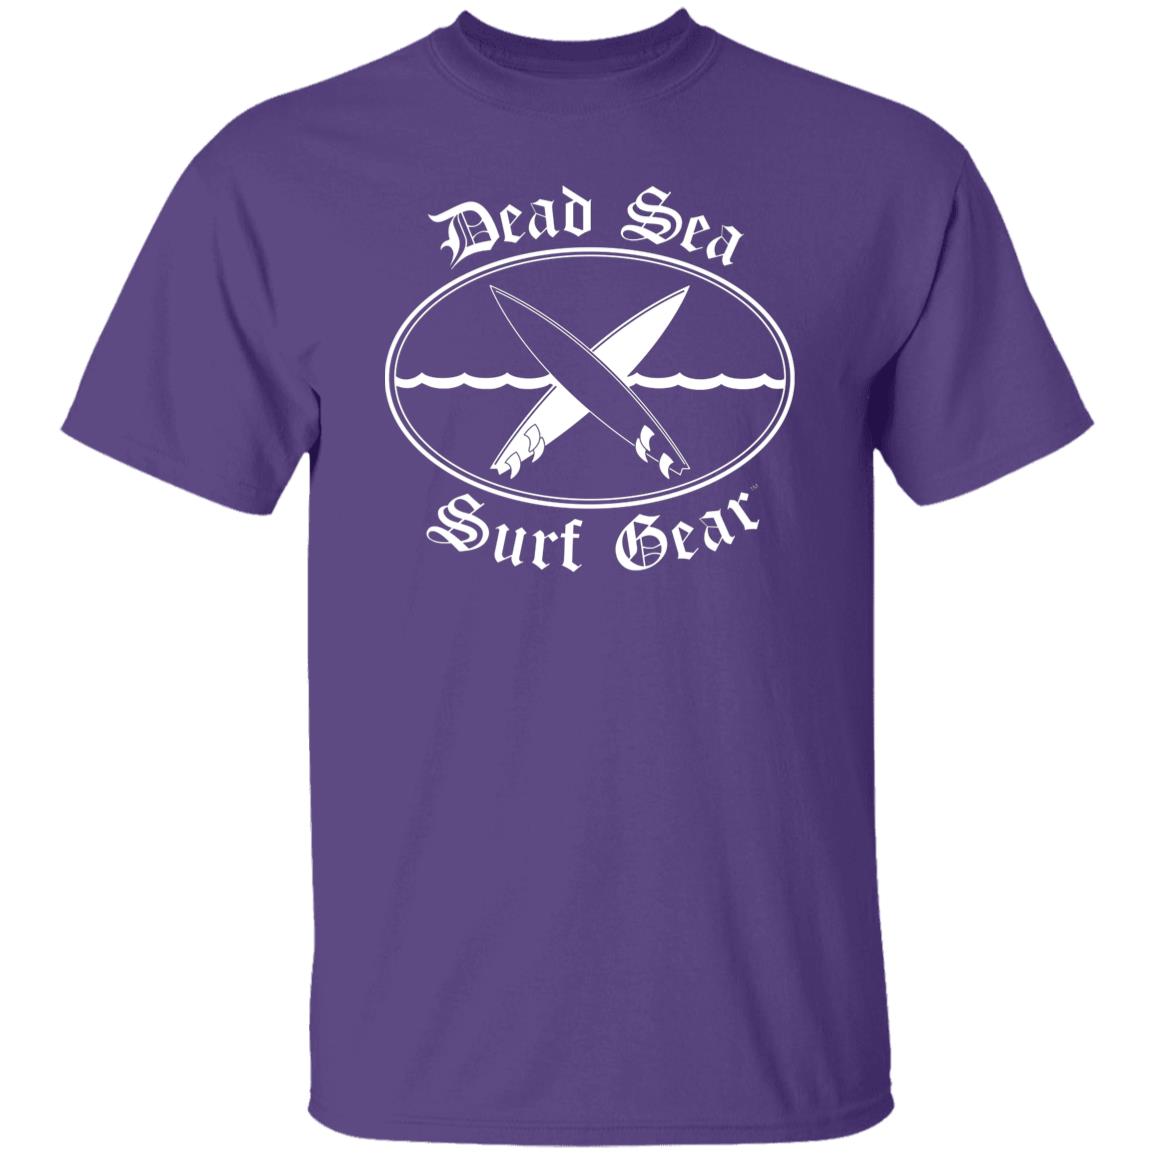 Dead Sea Surf Gear Men's Cotton Short Sleeve T-Shirt